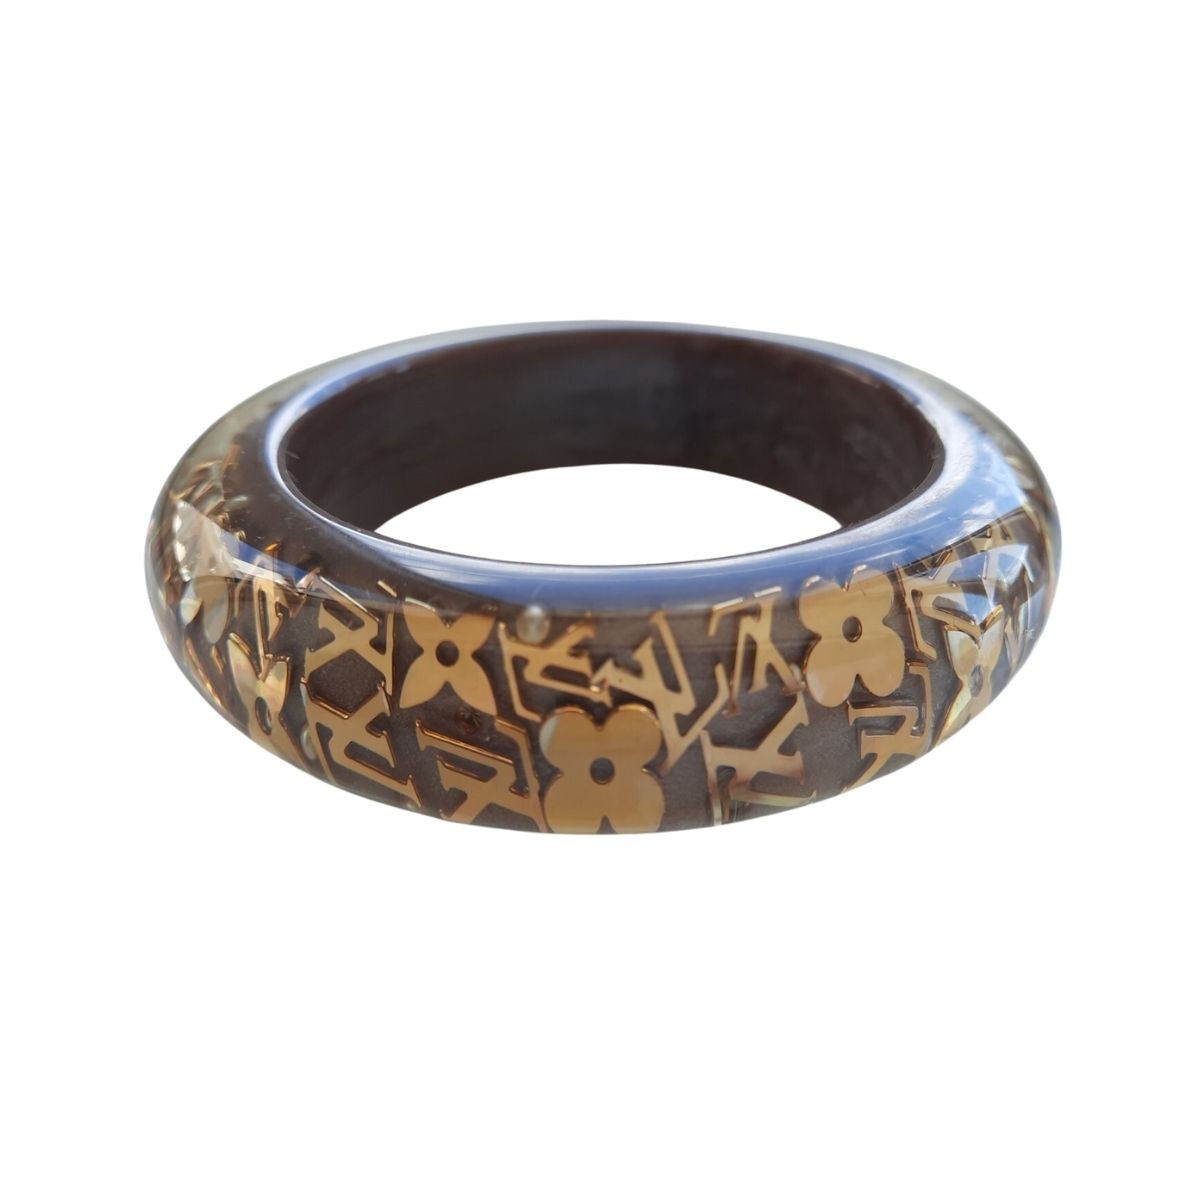 Louis Vuitton resin bangle bracelet  Resin bangles, Bangle bracelets,  Louis vuitton jewelry